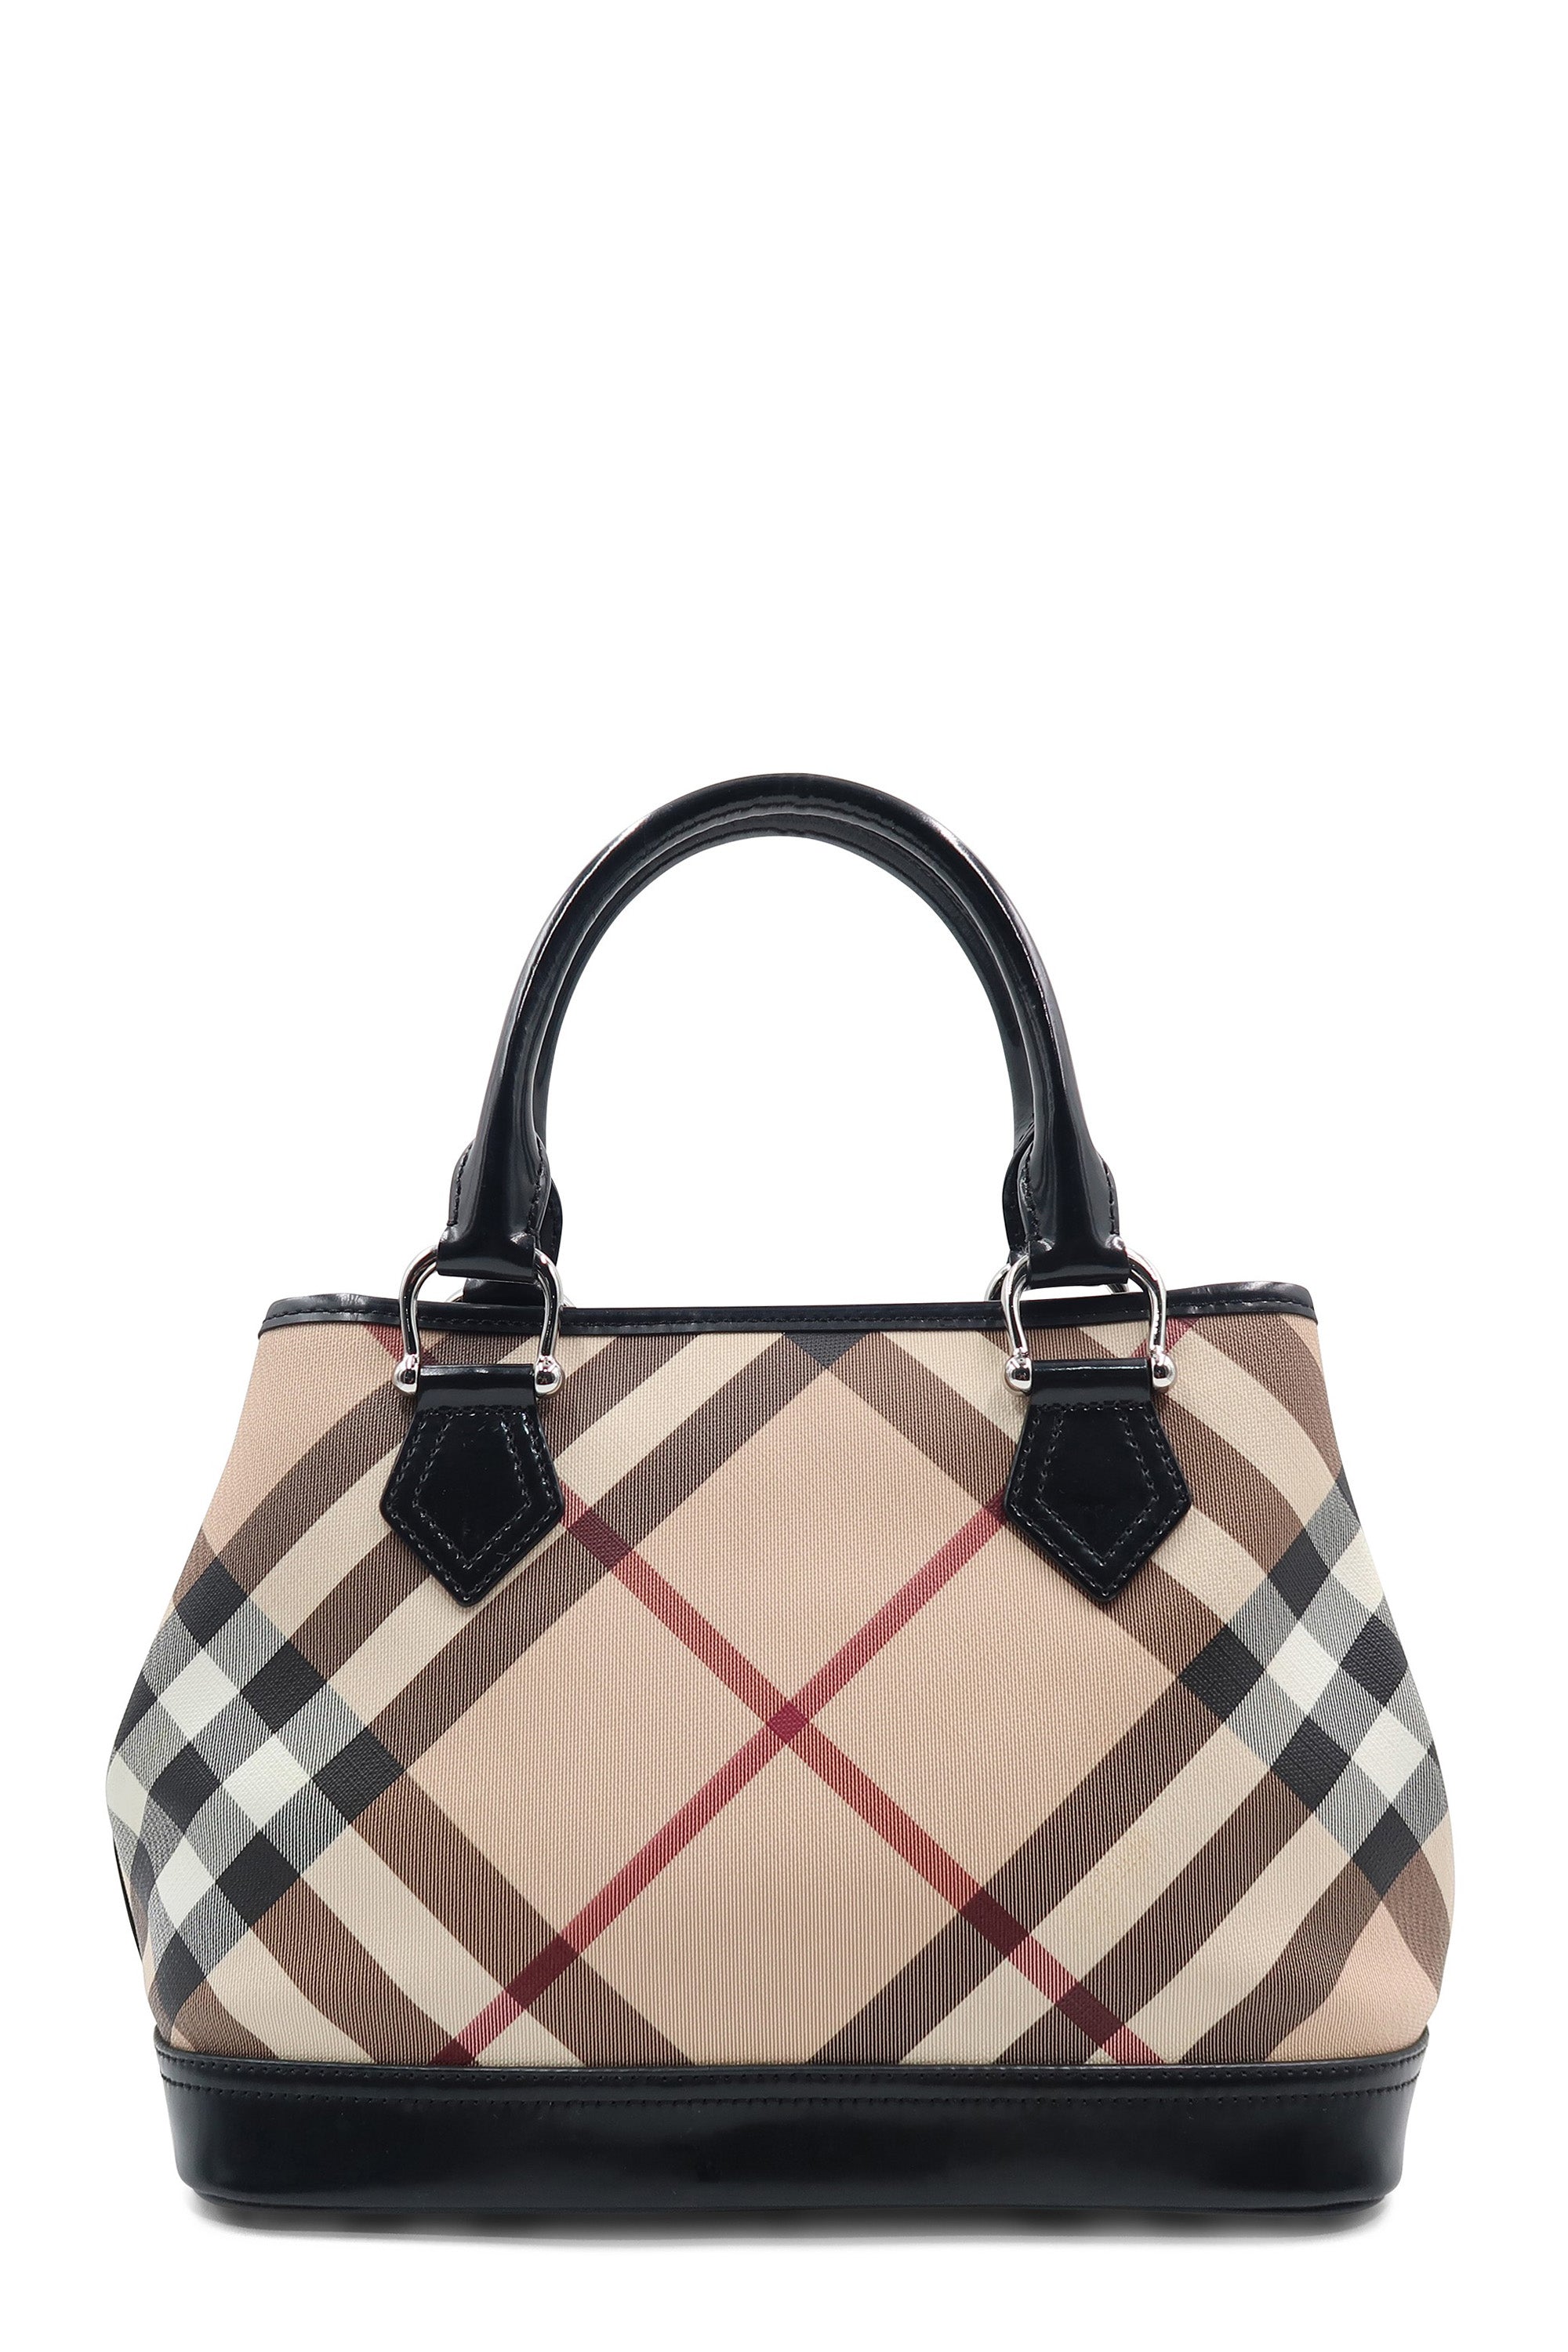 Amazon Brand - Eden & Ivy Women's Sling Bag (Rose Gold) : Amazon.in: Fashion